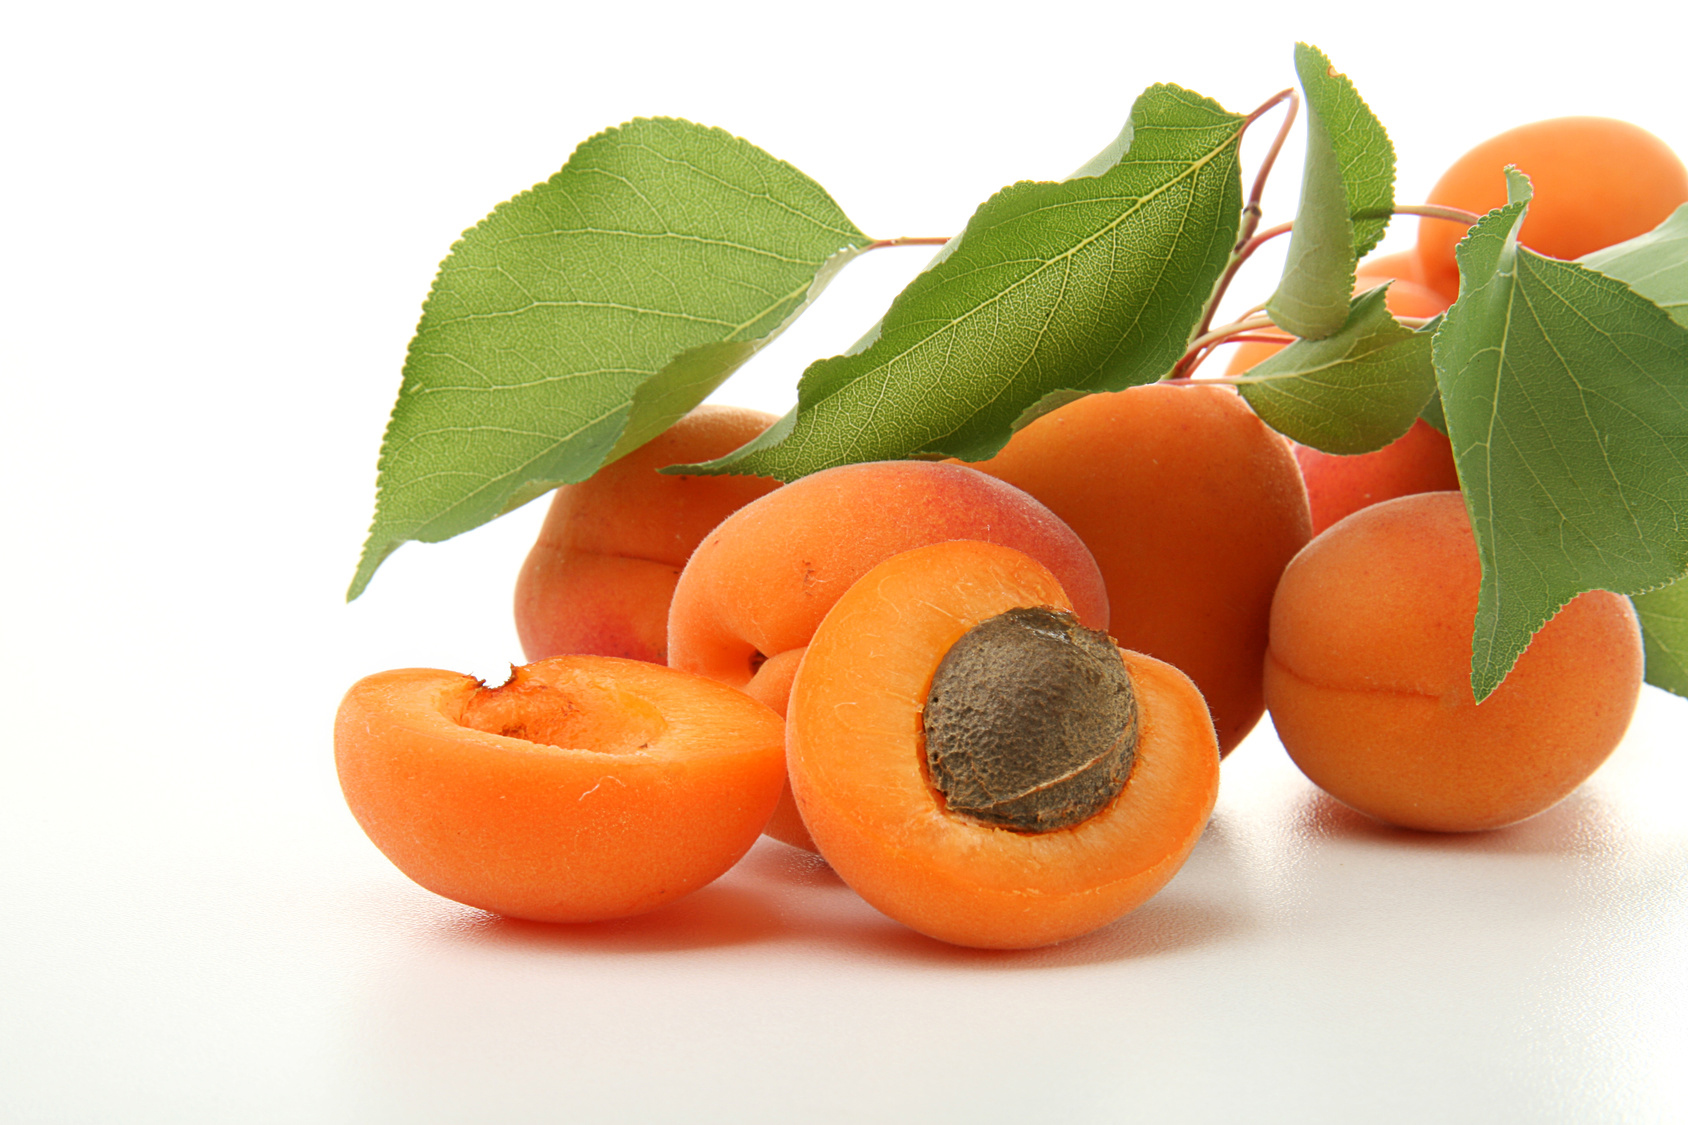 EU apricot crop plummets in 2020